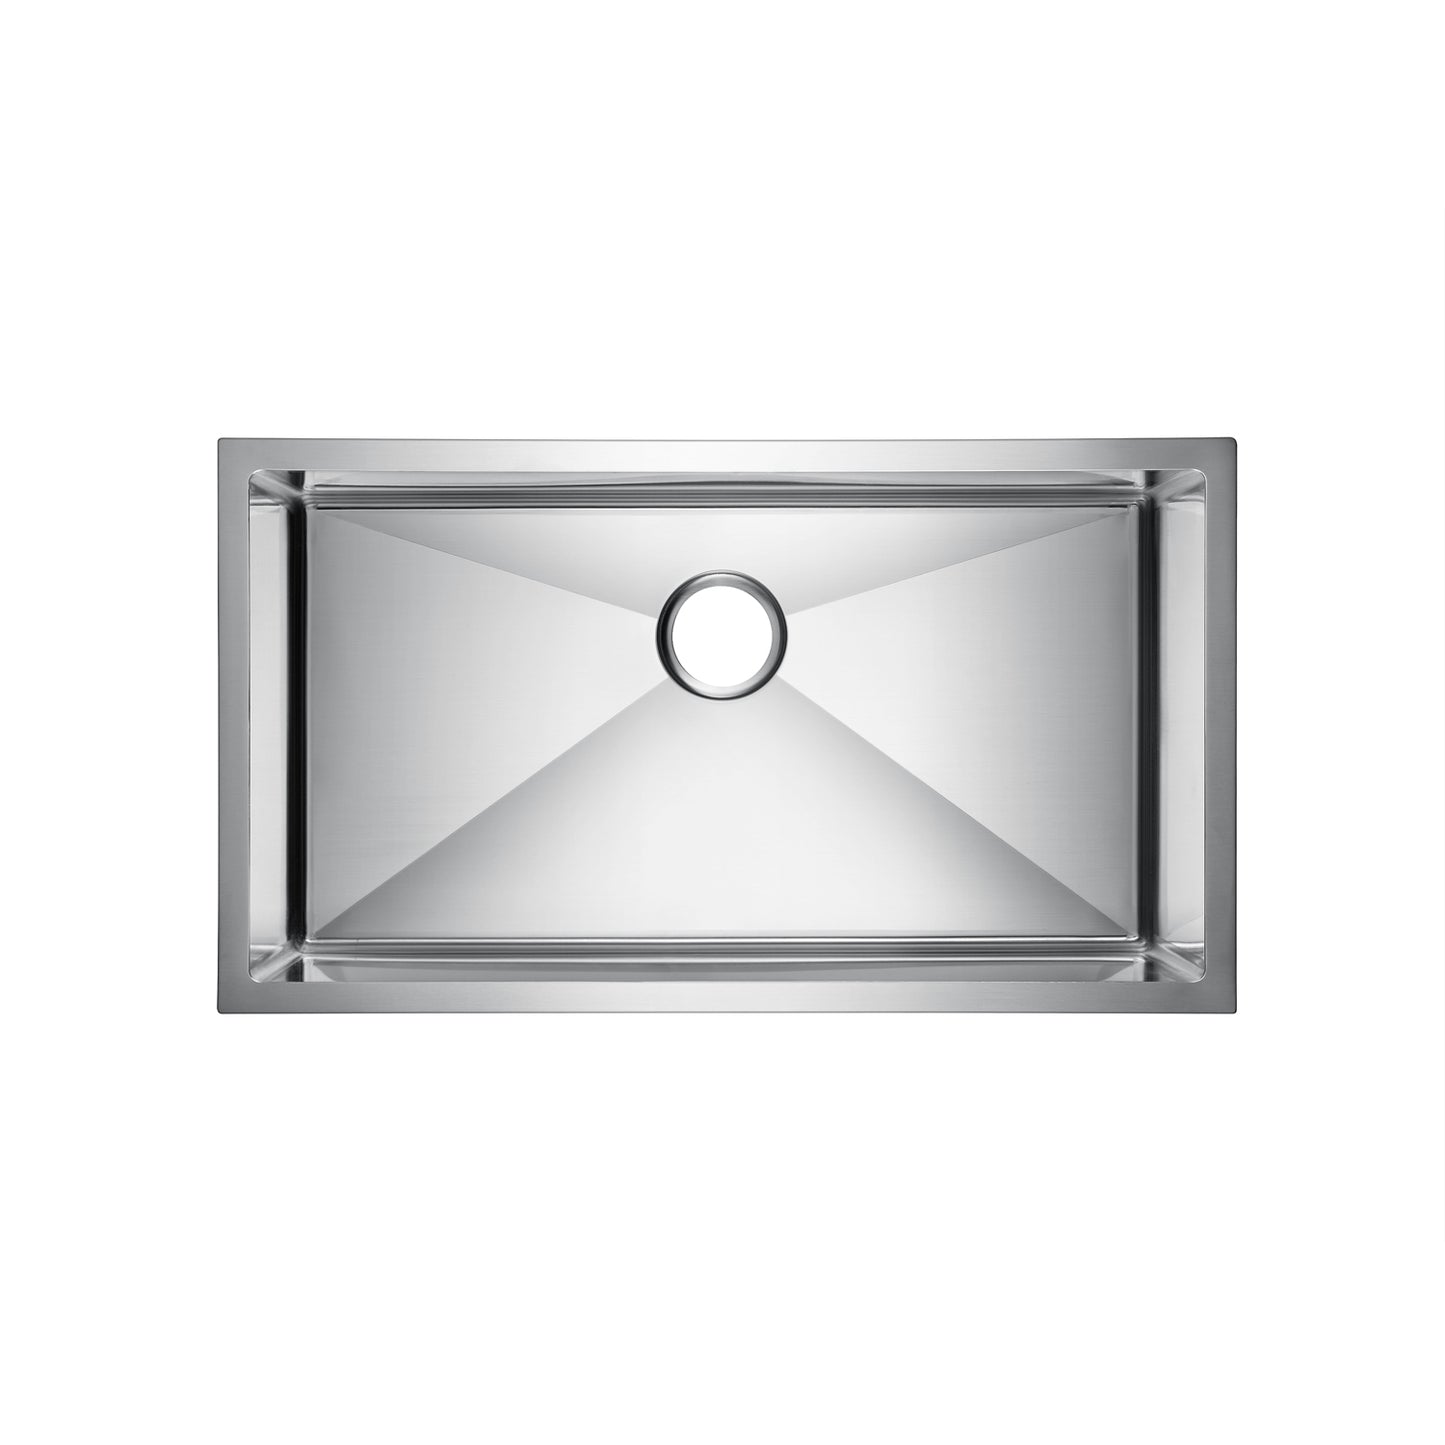 Fabyan 32" x 19" Stainless Steel Single Bowl Undermount Kitchen Sink